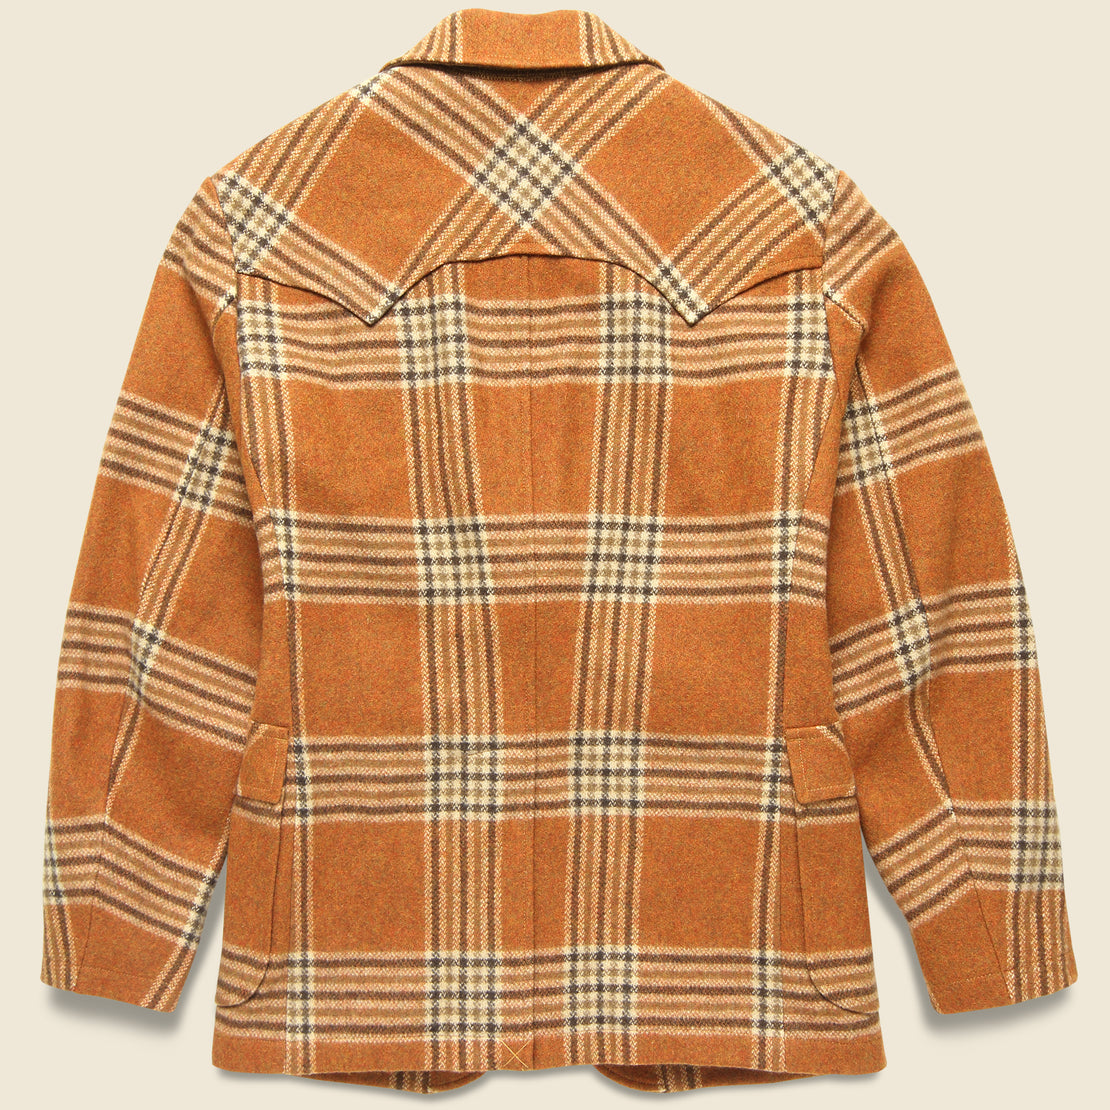 Callington Wool Jacket - Orange/Tan Plaid - RRL - STAG Provisions - Outerwear - Coat / Jacket